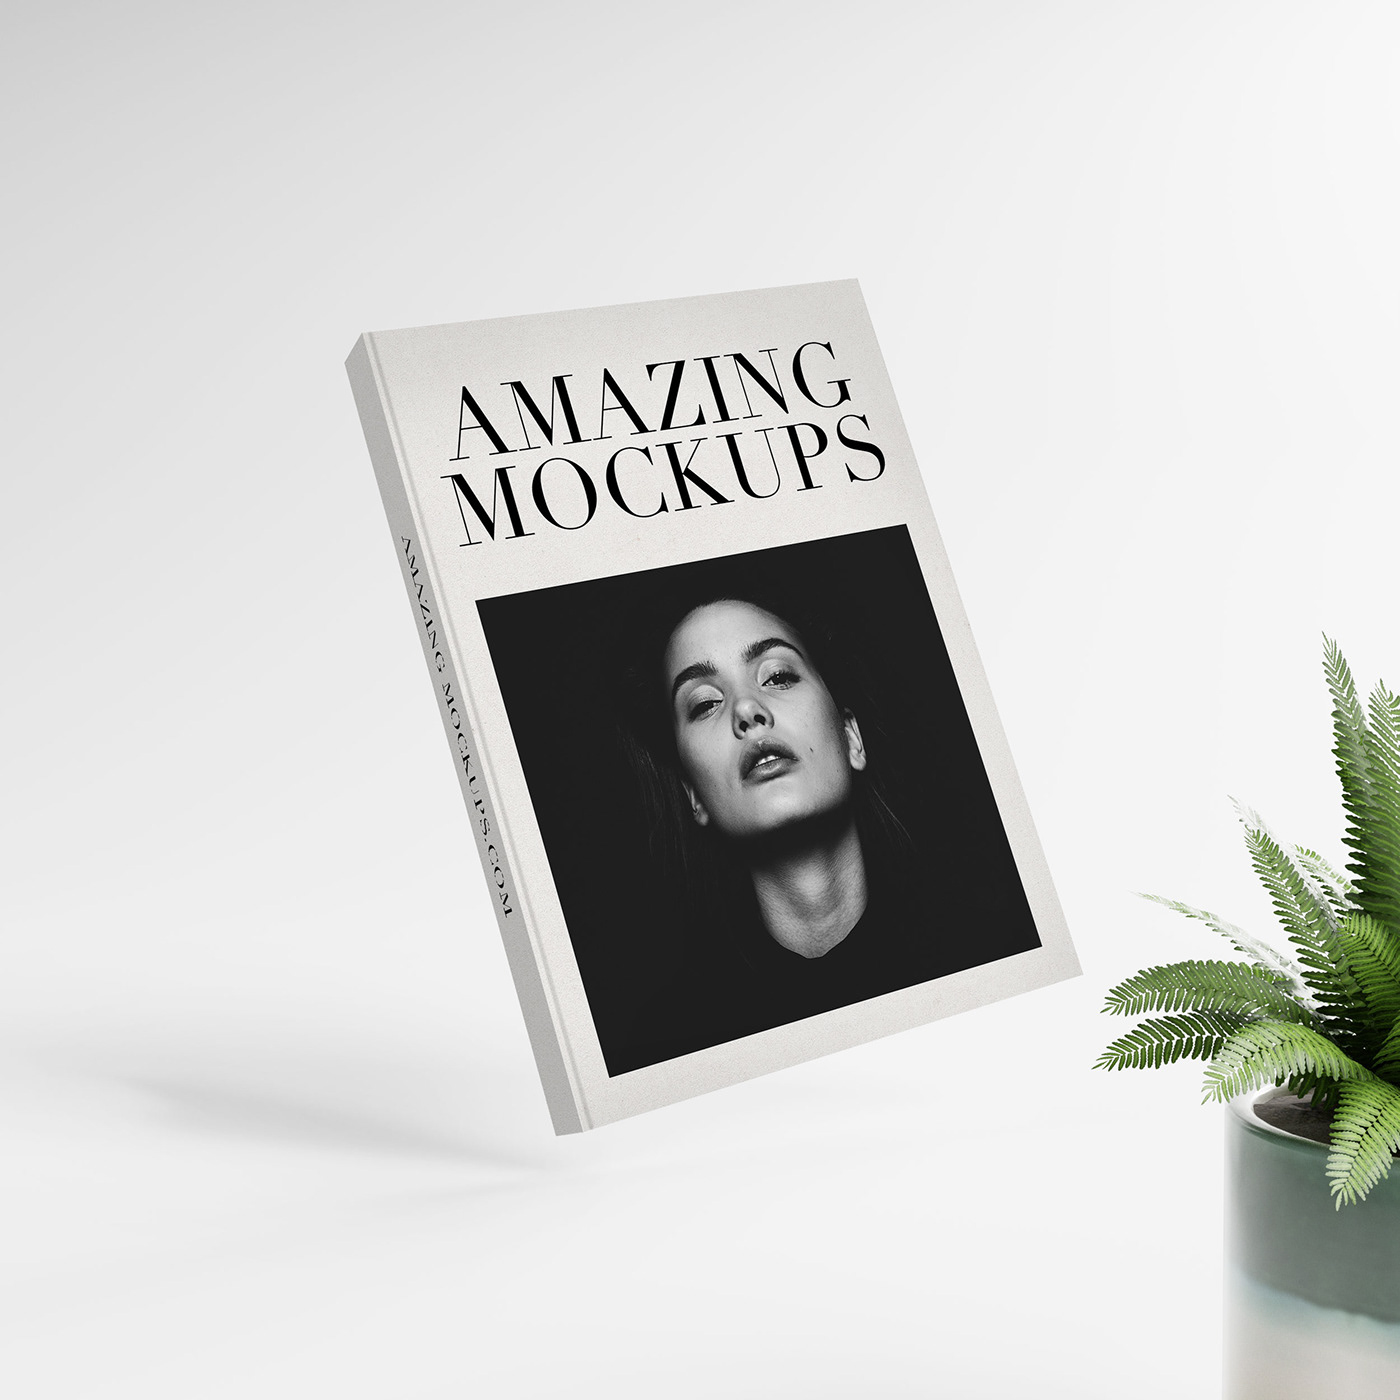 book download free freebie hardcover minimalistic Mockup modern White